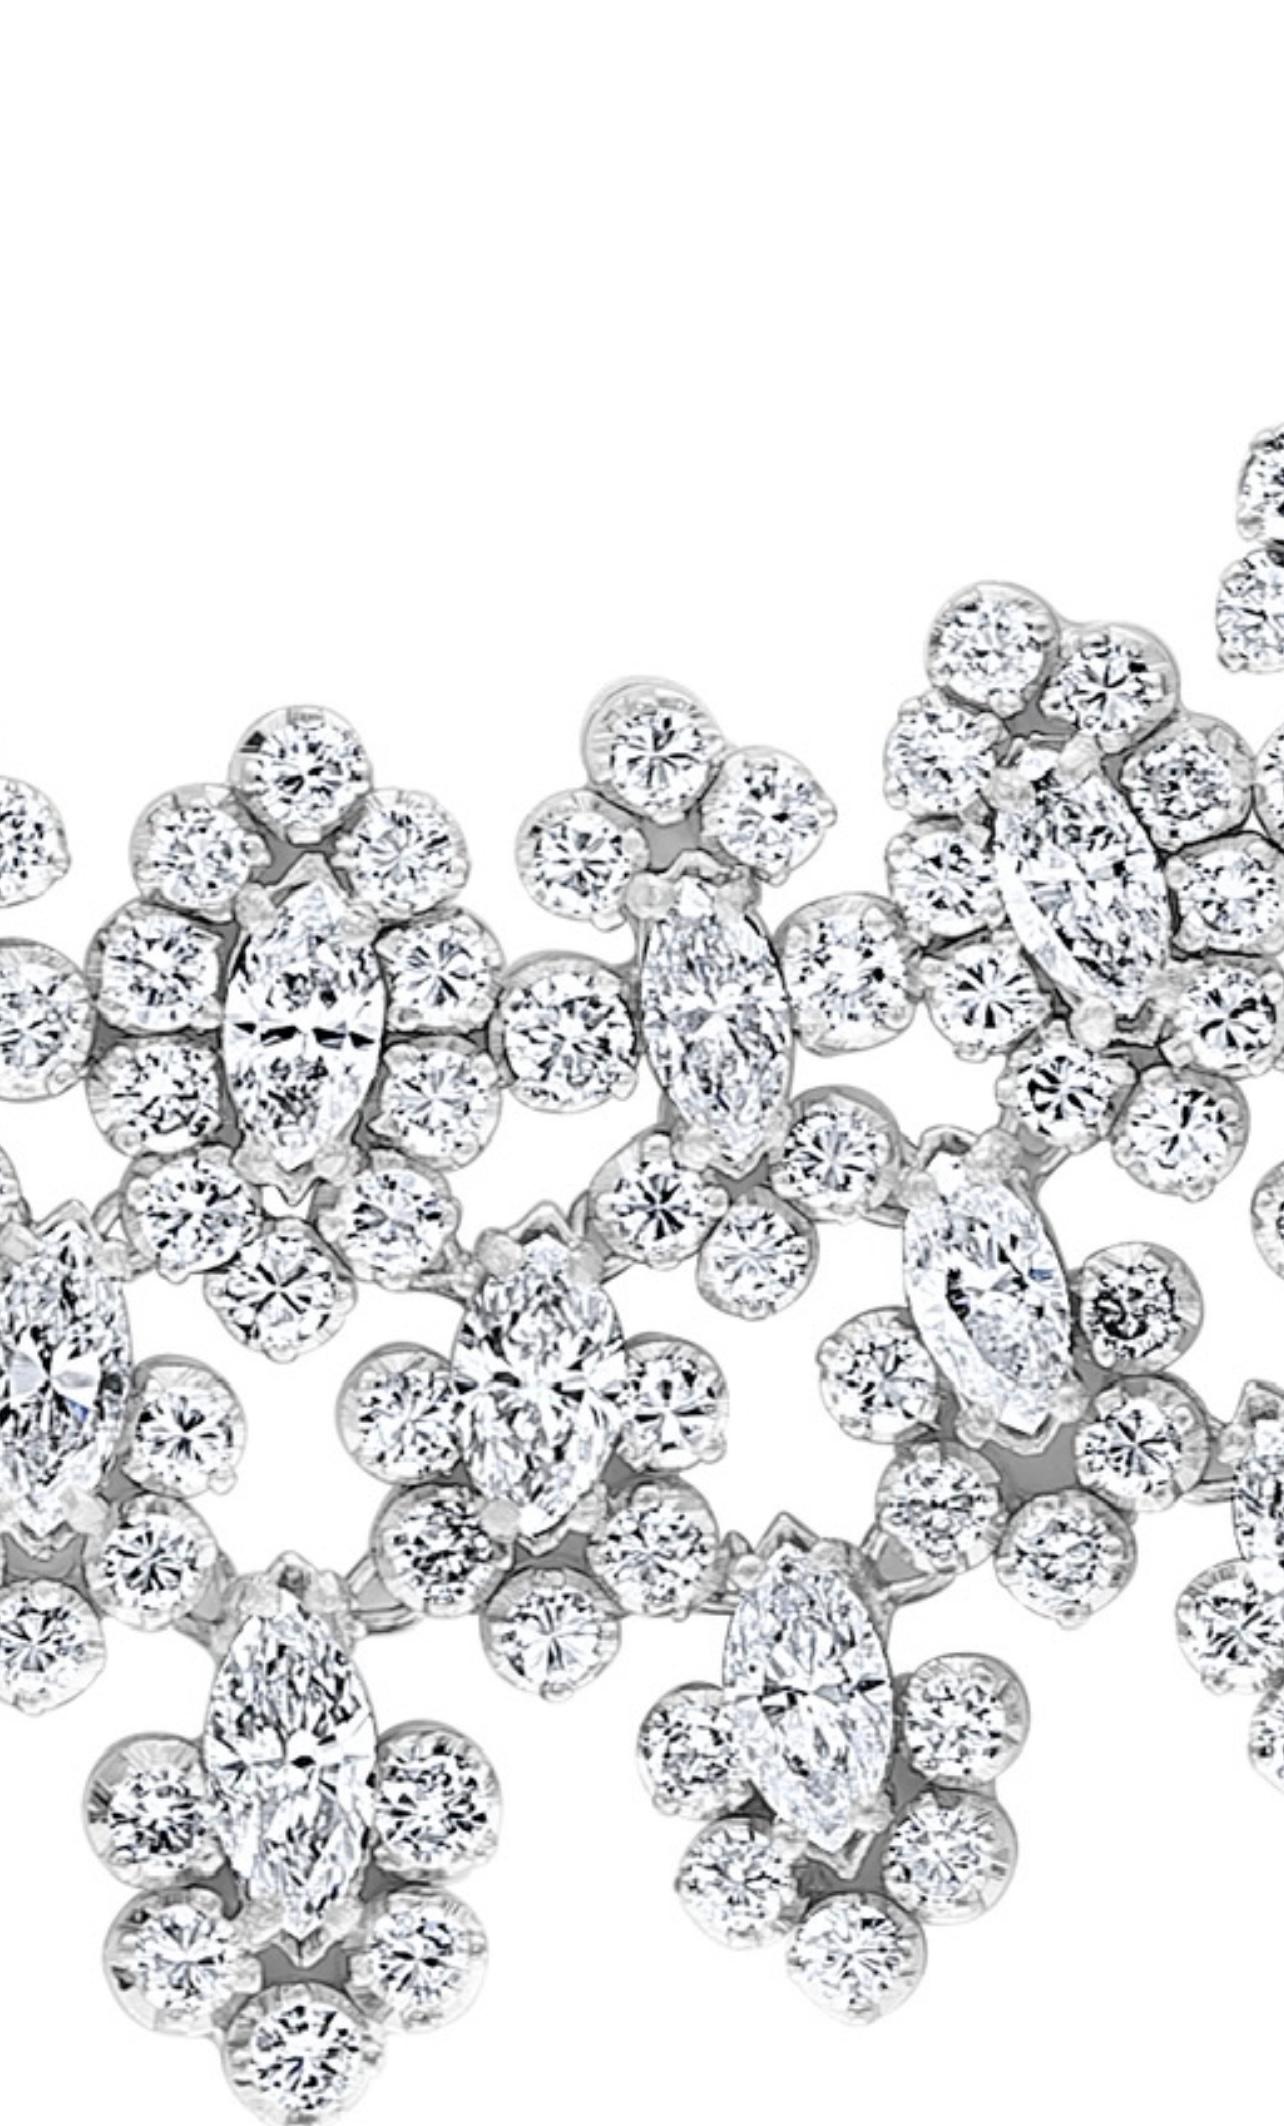 55 Ct Diamond Bridal Necklace 18 Karat White Gold 107 Gm, Estate For Sale 1